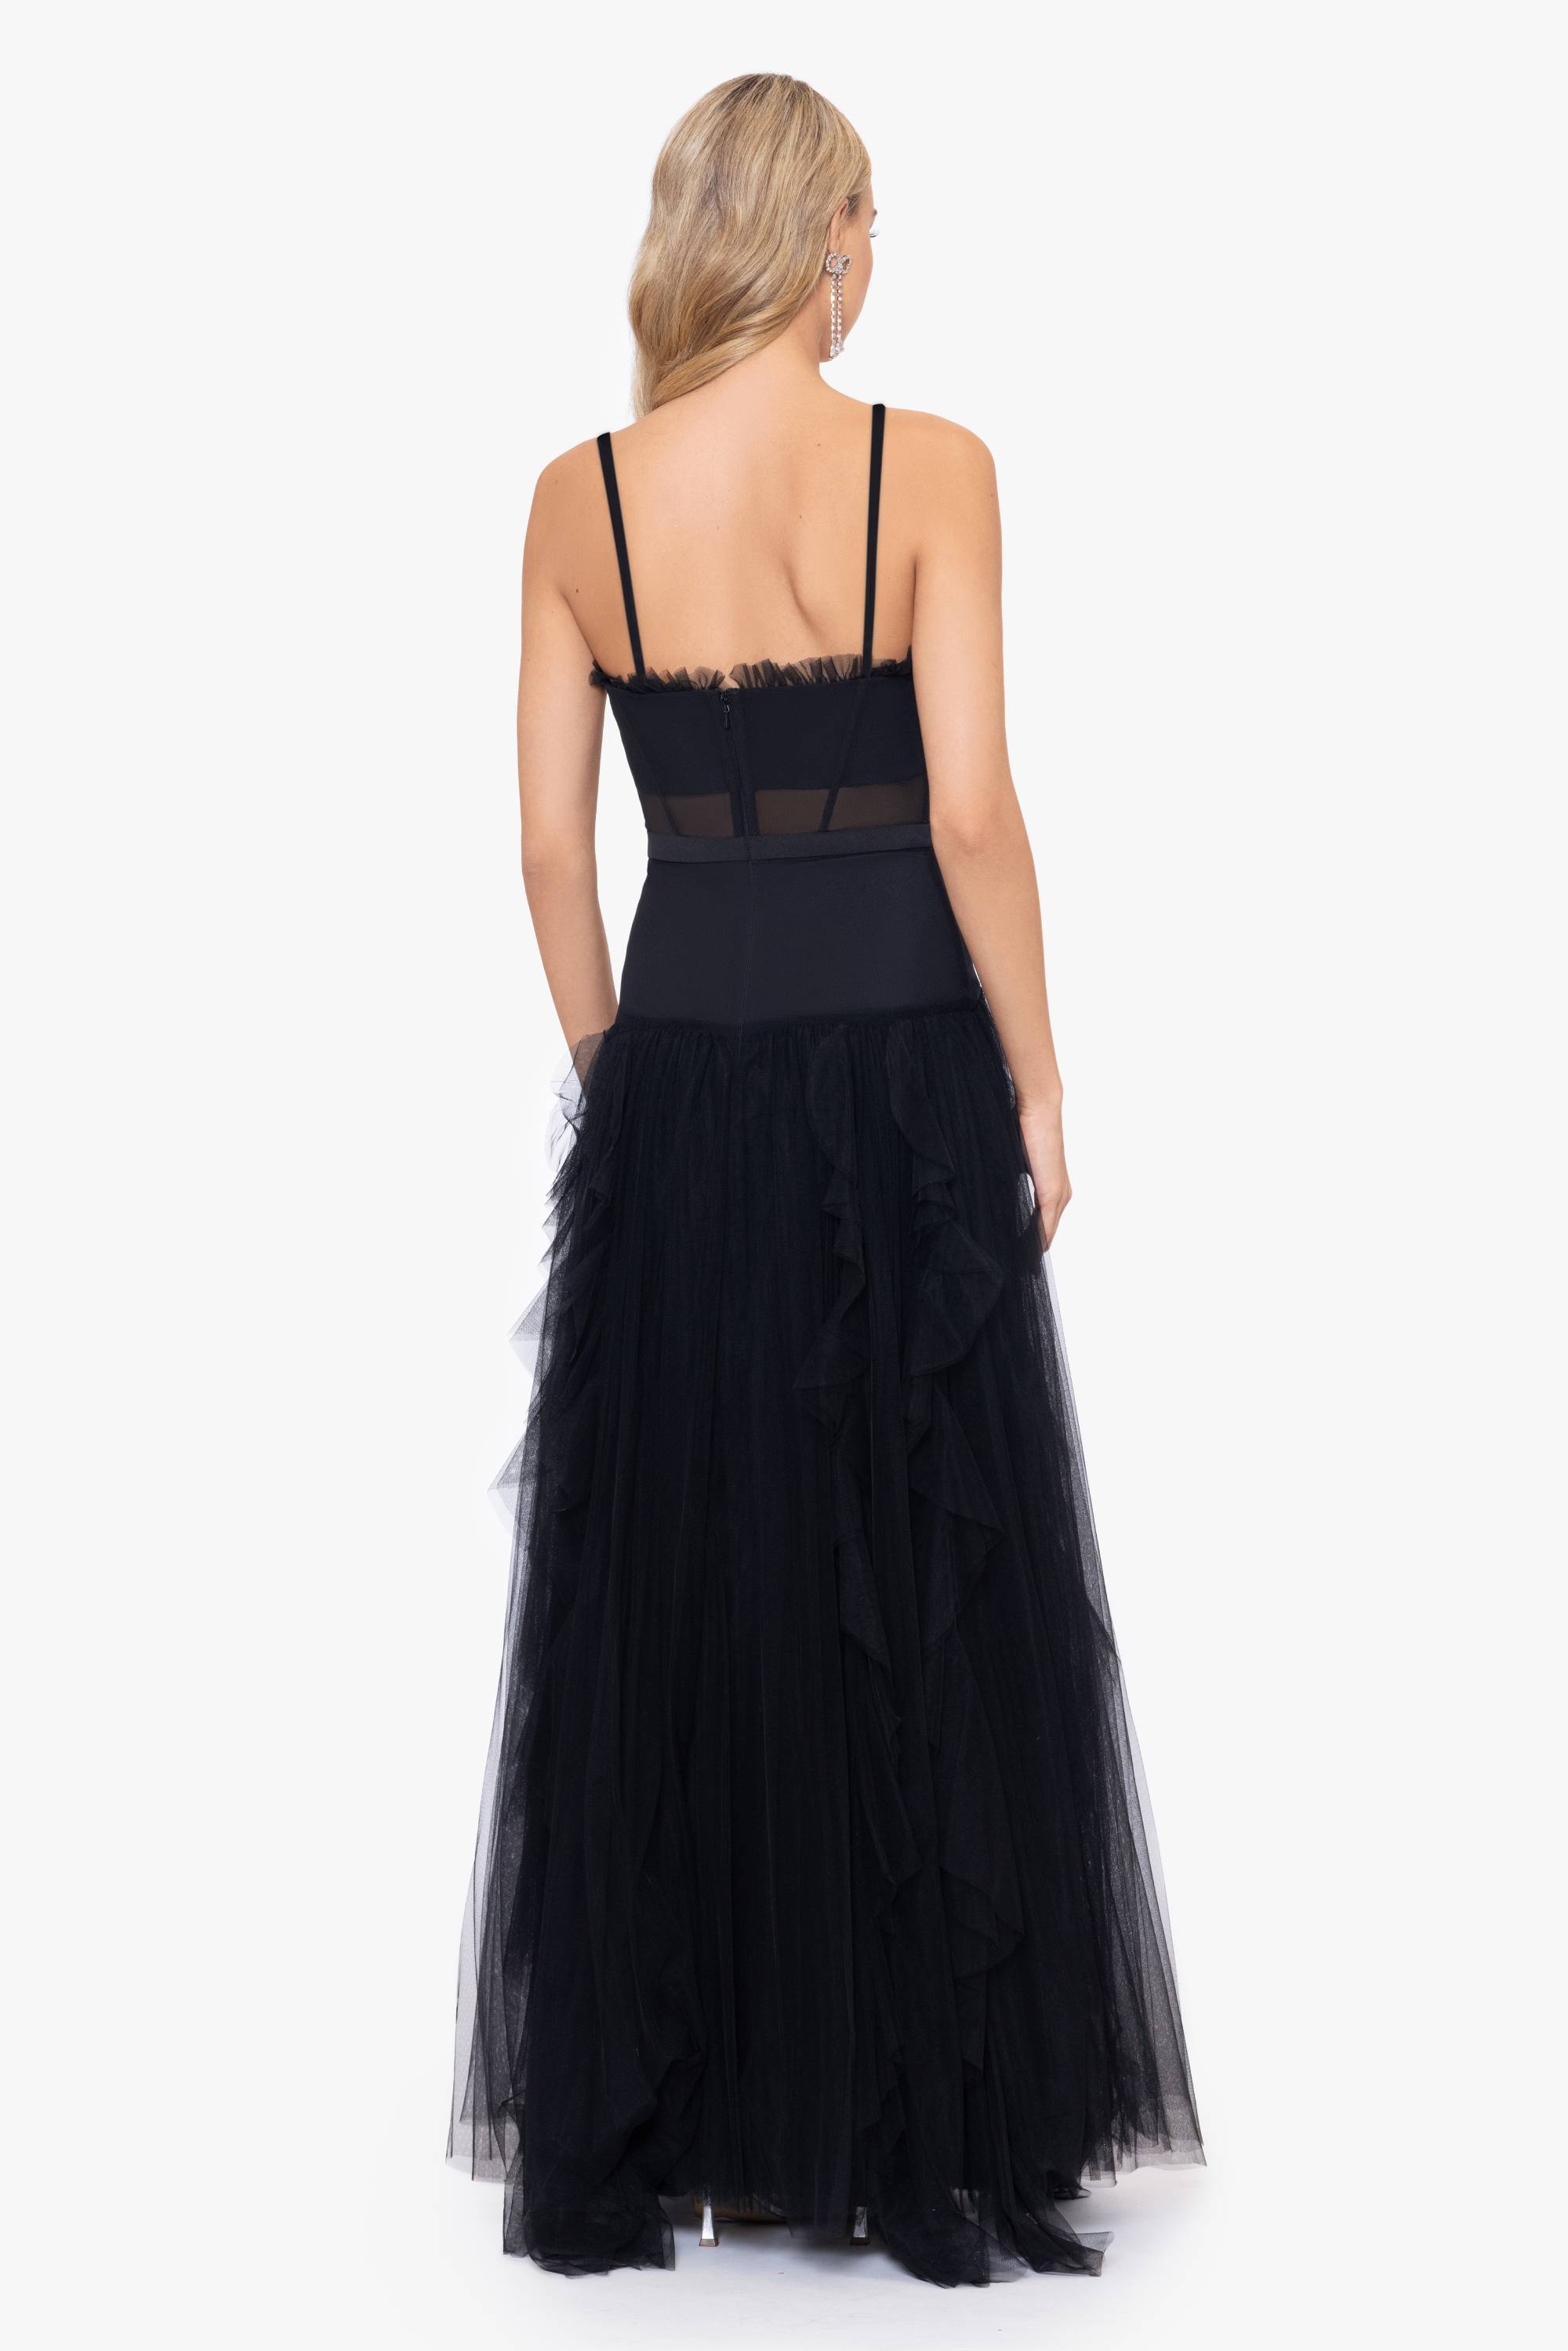 French Retro Dress Long Summer Black Dress Woman Square-Neck Inspirational  Design Stylish Niche Overknee Dress | Shopee Malaysia